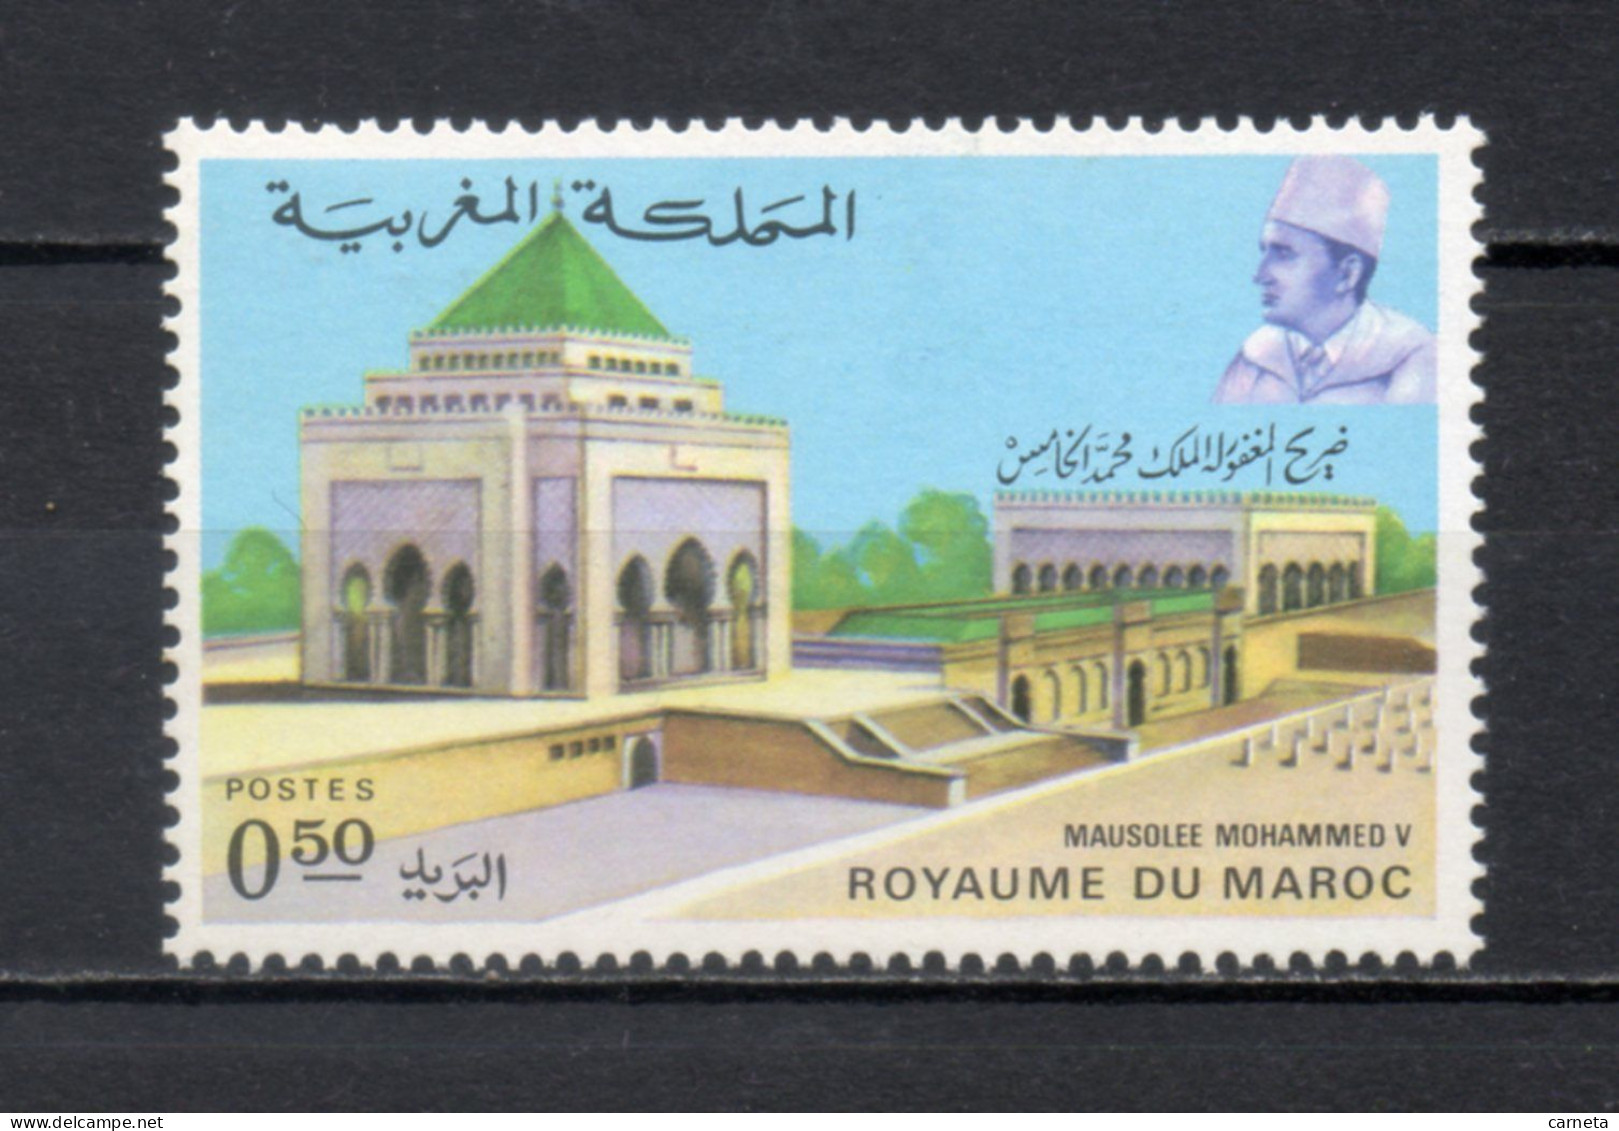 MAROC N°  623   NEUF SANS CHARNIERE  COTE  0.70€   MAUSOLEE DE MOHAMED V - Maroc (1956-...)